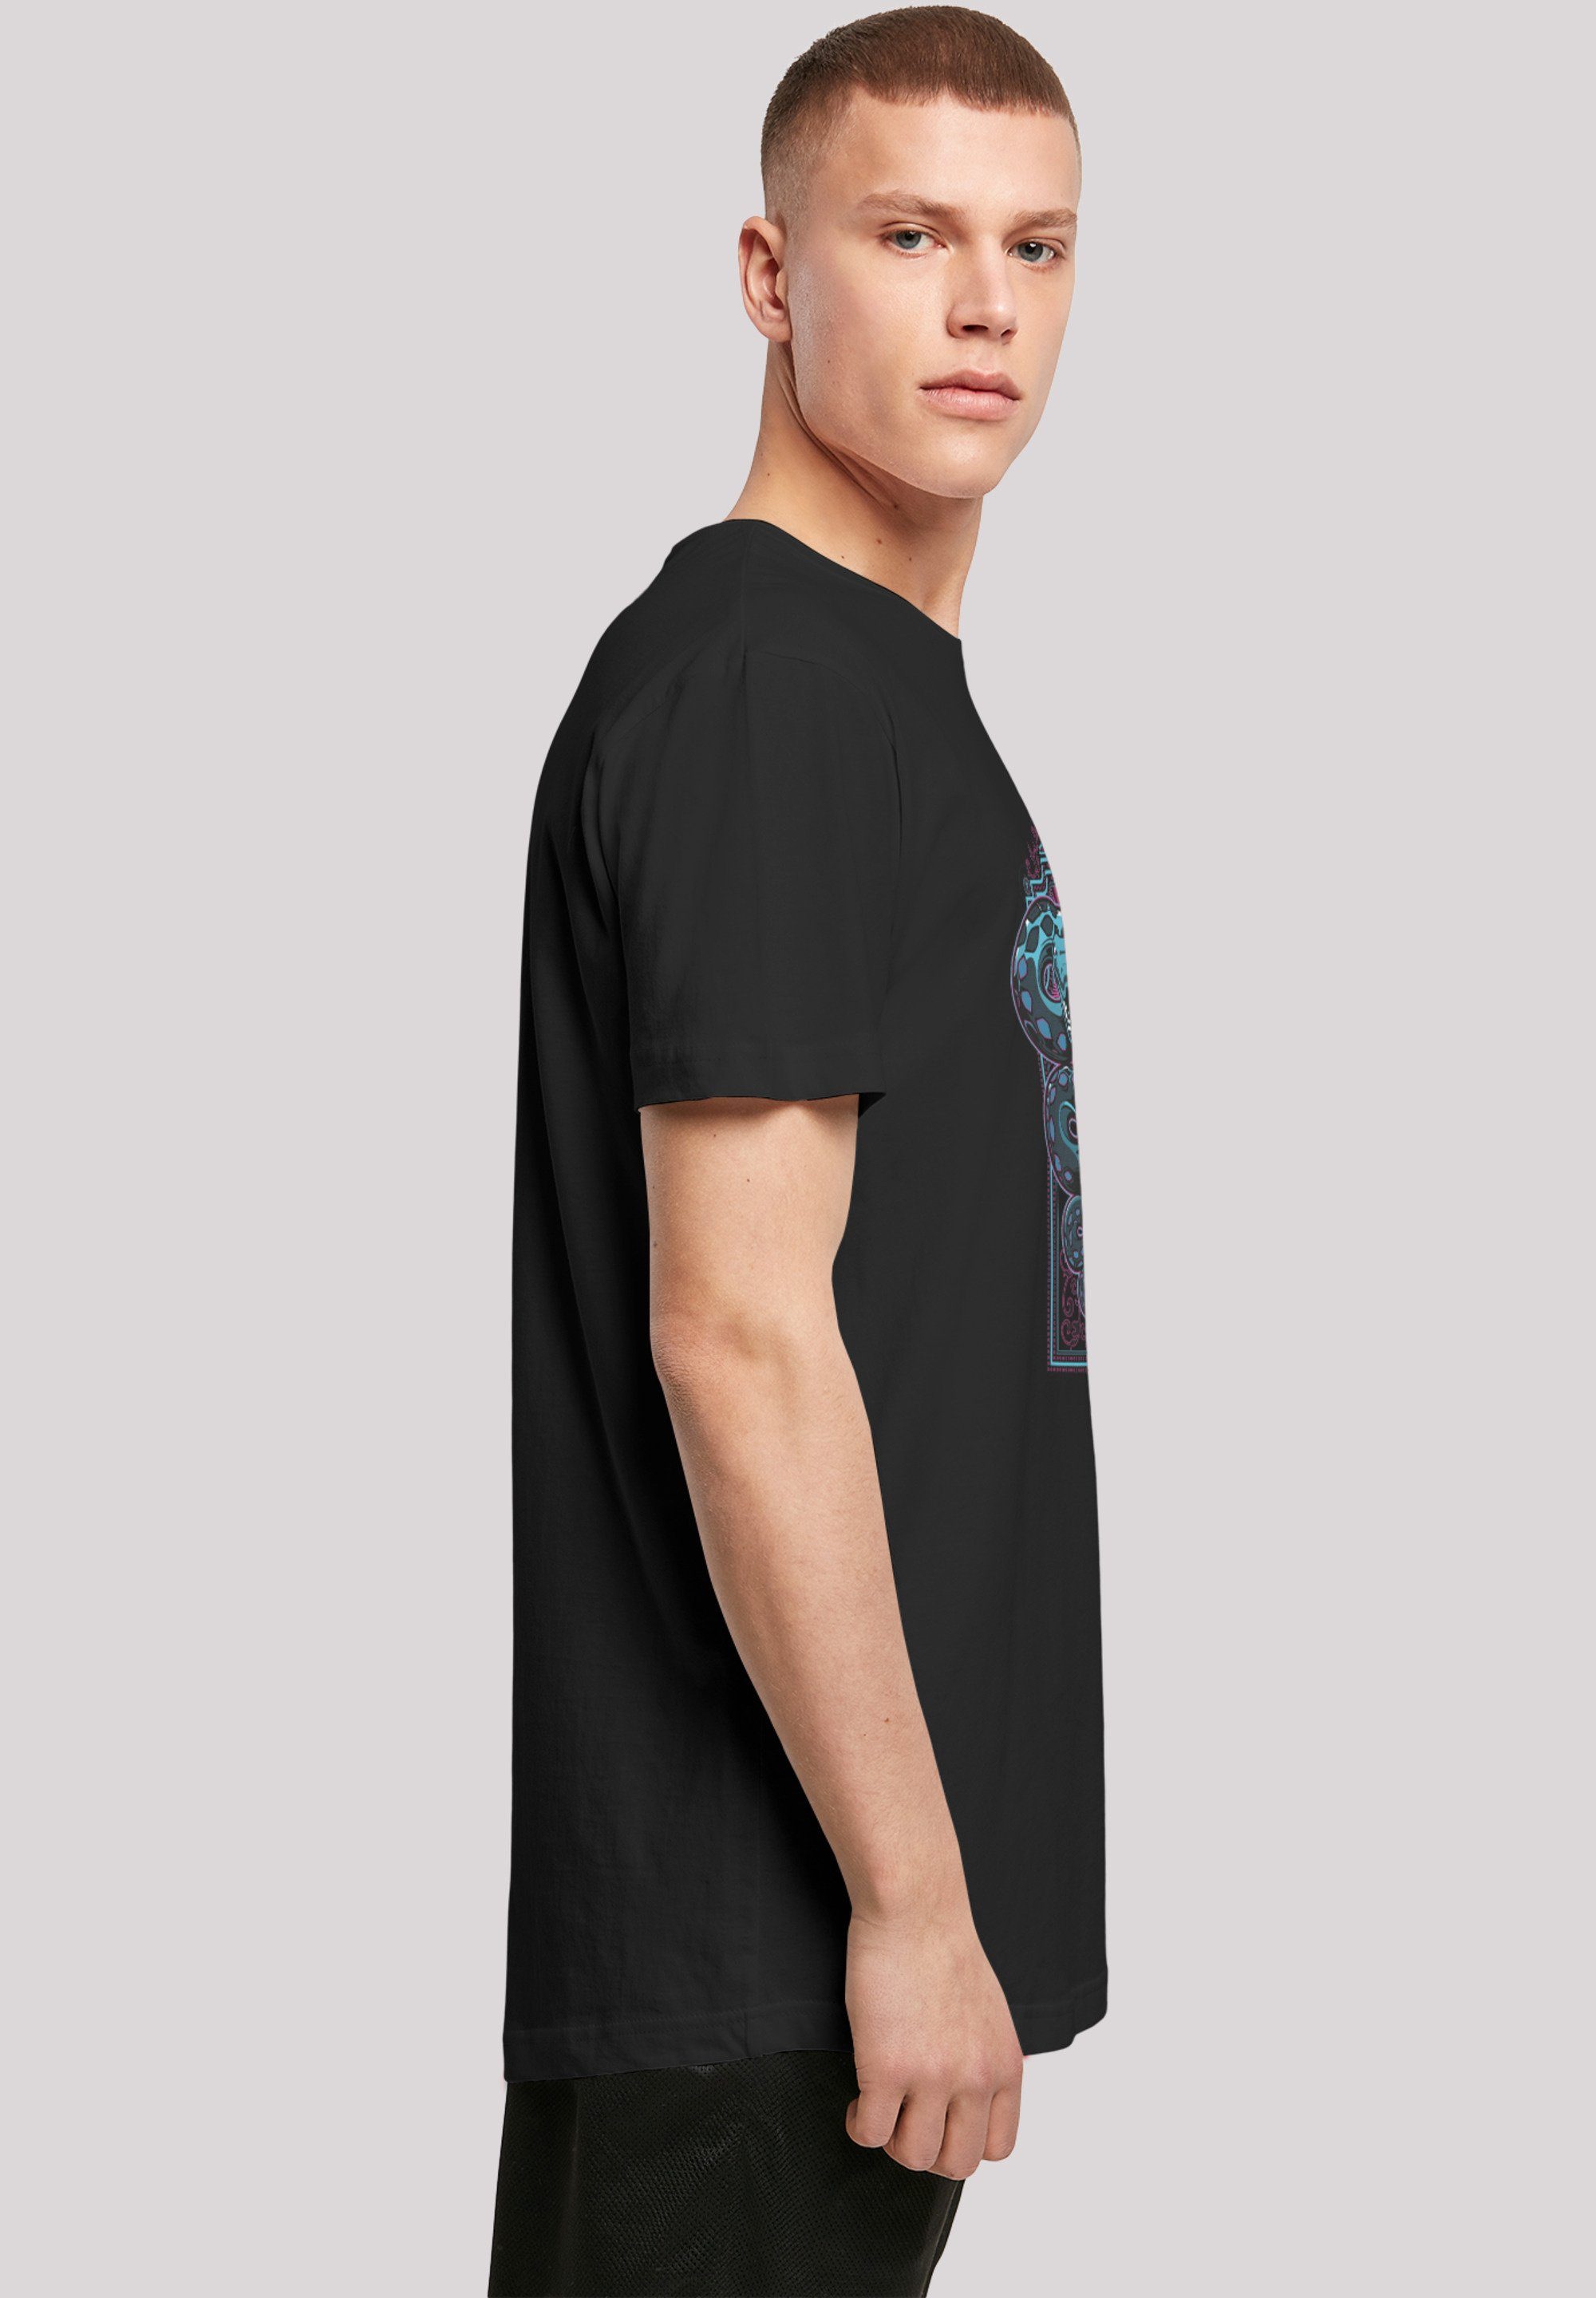 Neon Print Nagini Potter Harry F4NT4STIC T-Shirt schwarz